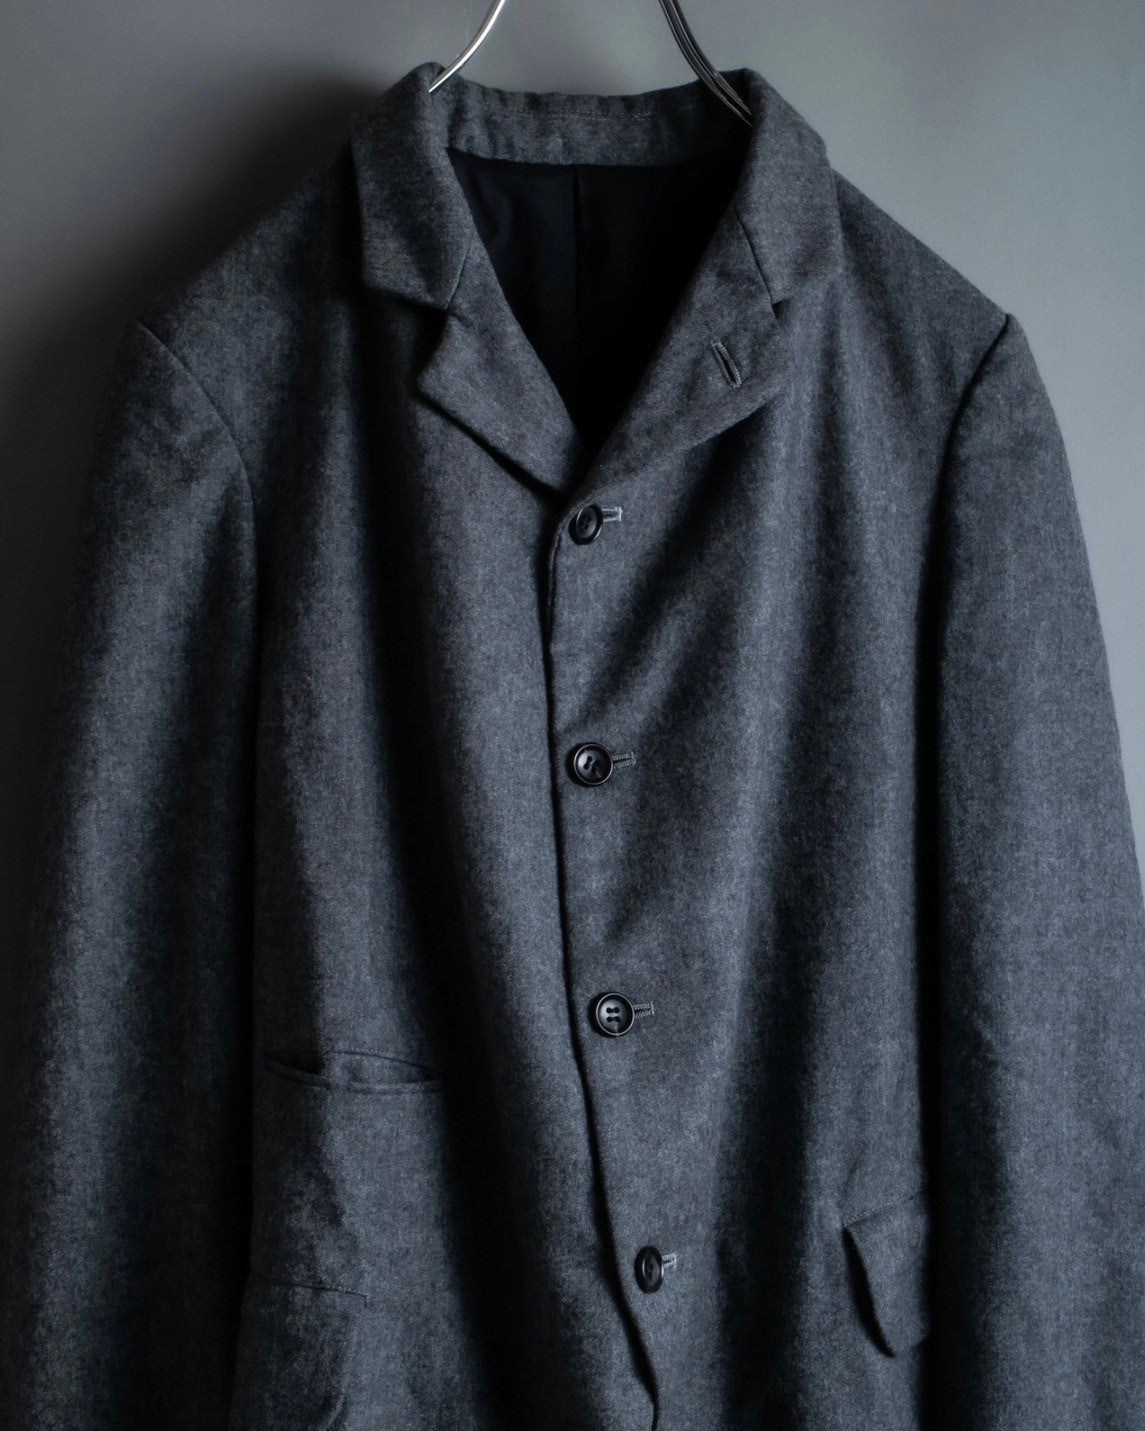 "Comme des Garçons" Stand collar multiple pocket tailored jacket